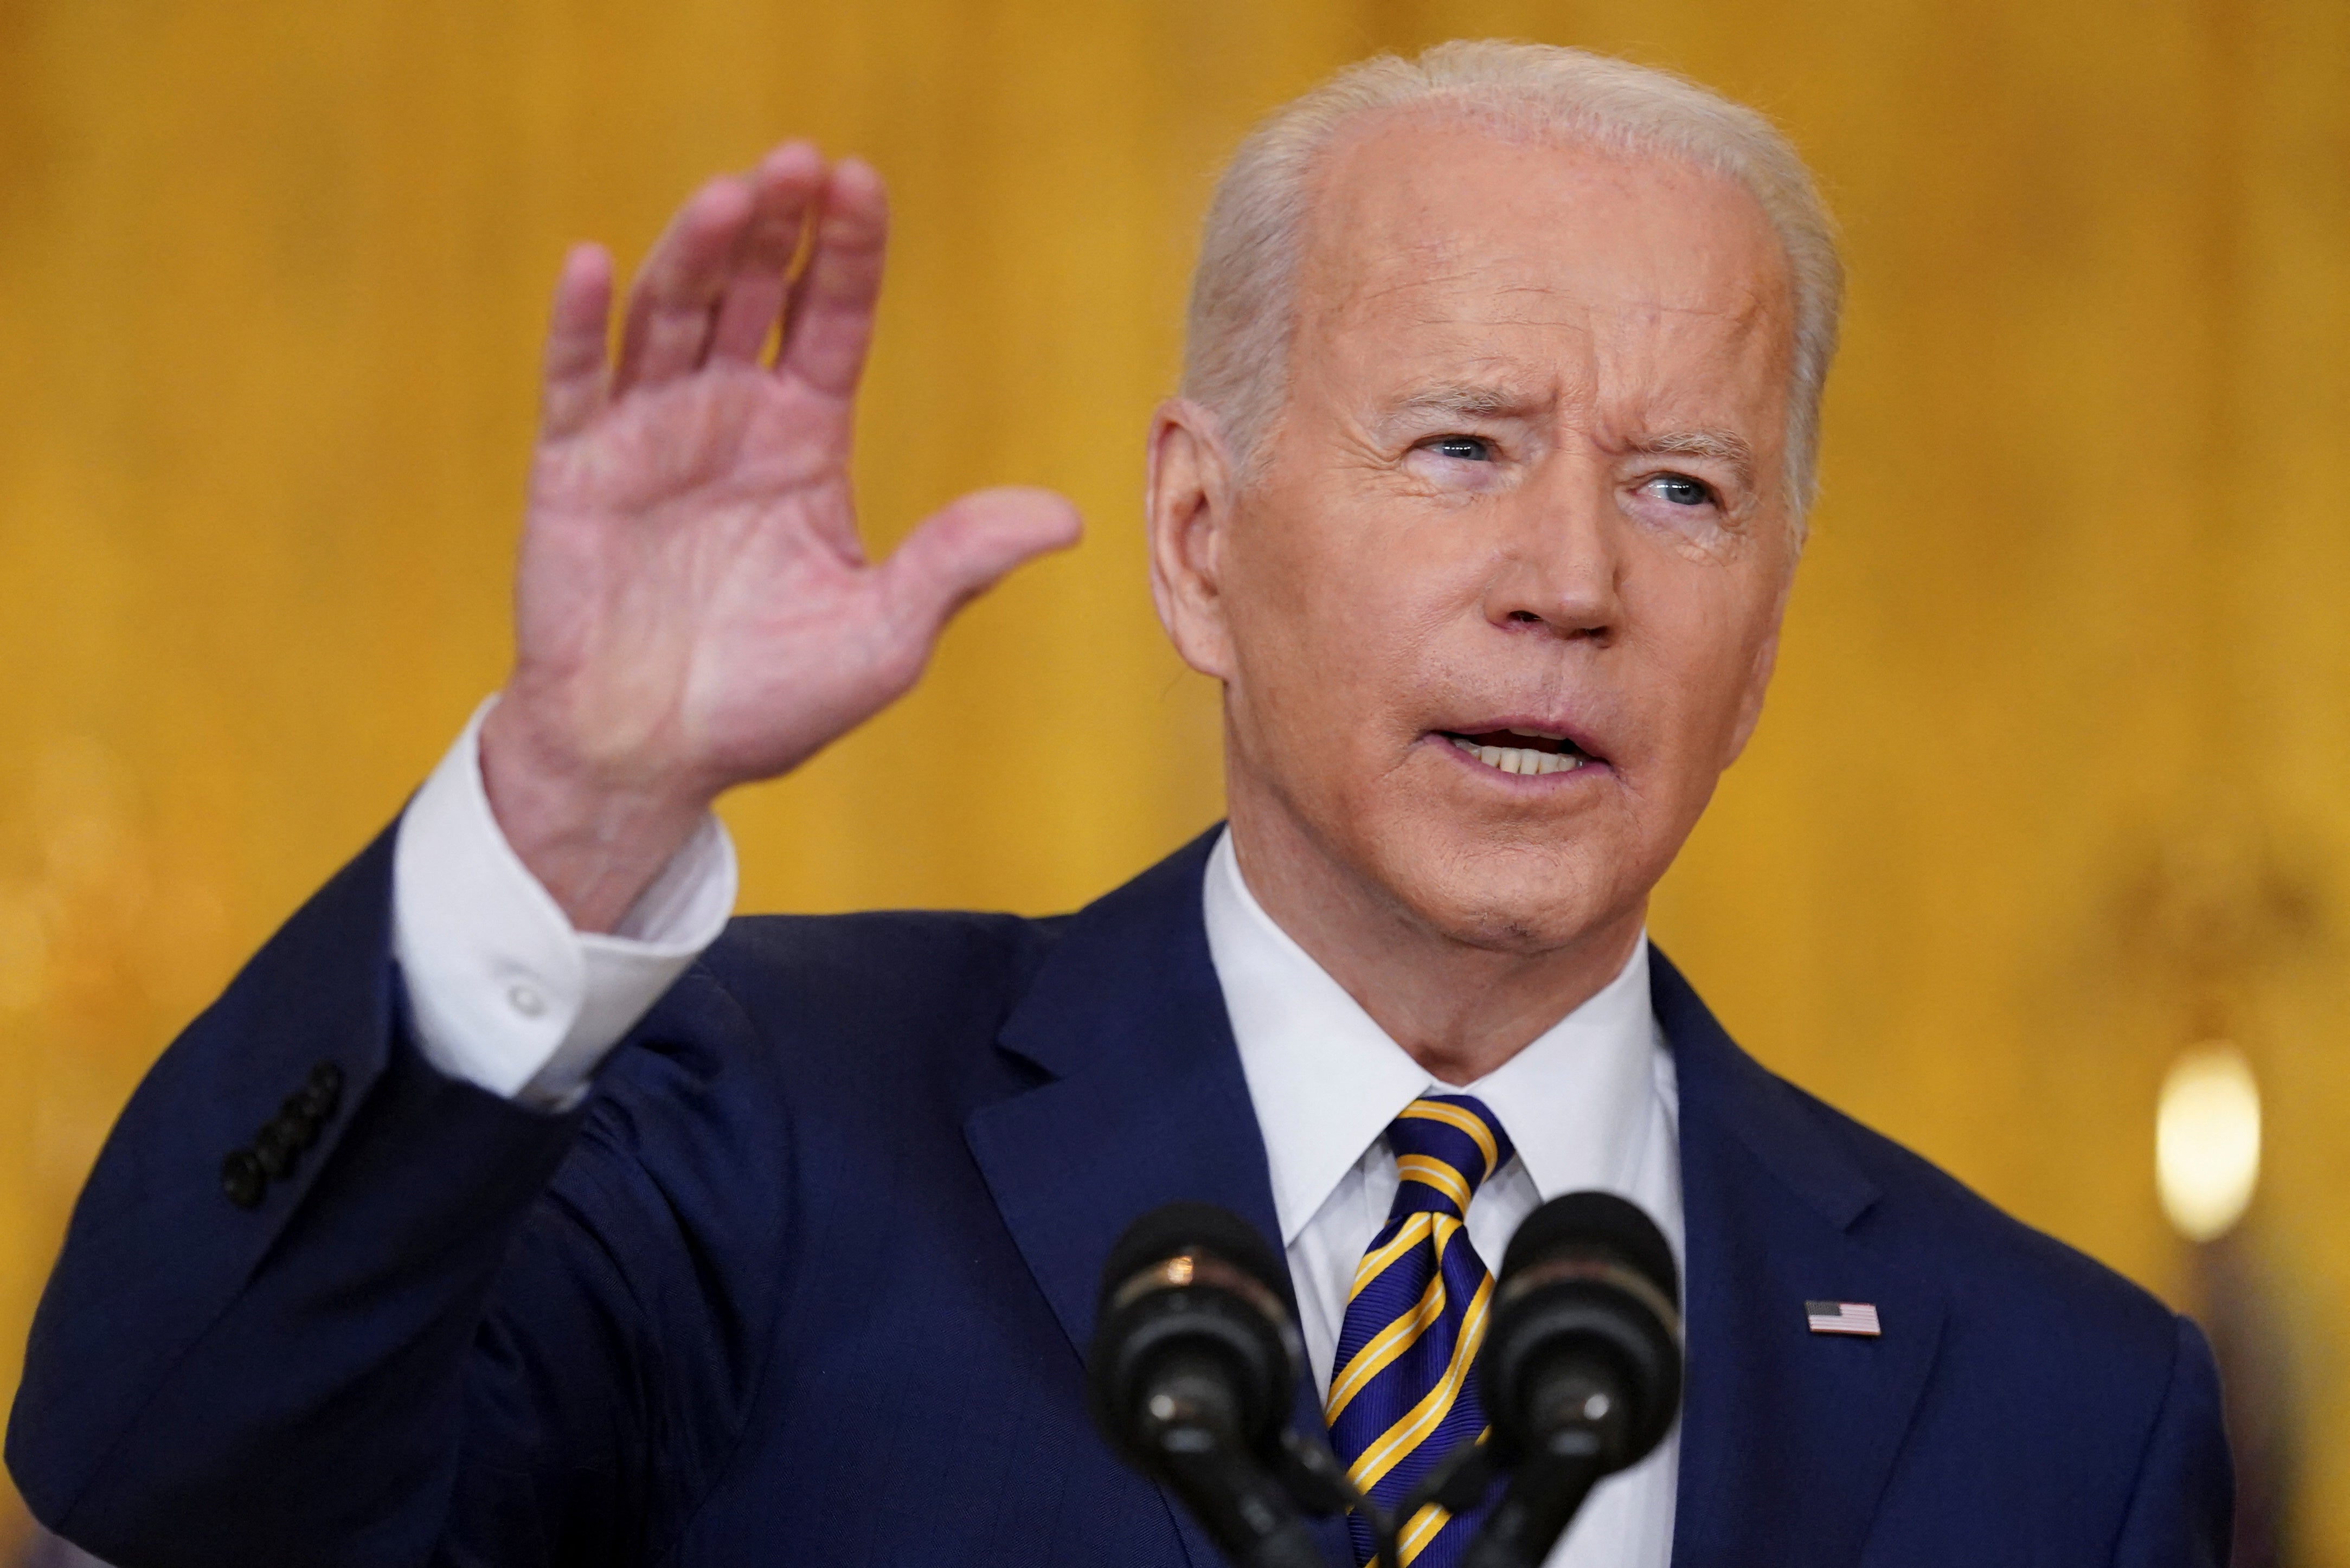 US President Joe Biden said he predicted Vladimir Putin will ‘move in’ on Ukraine